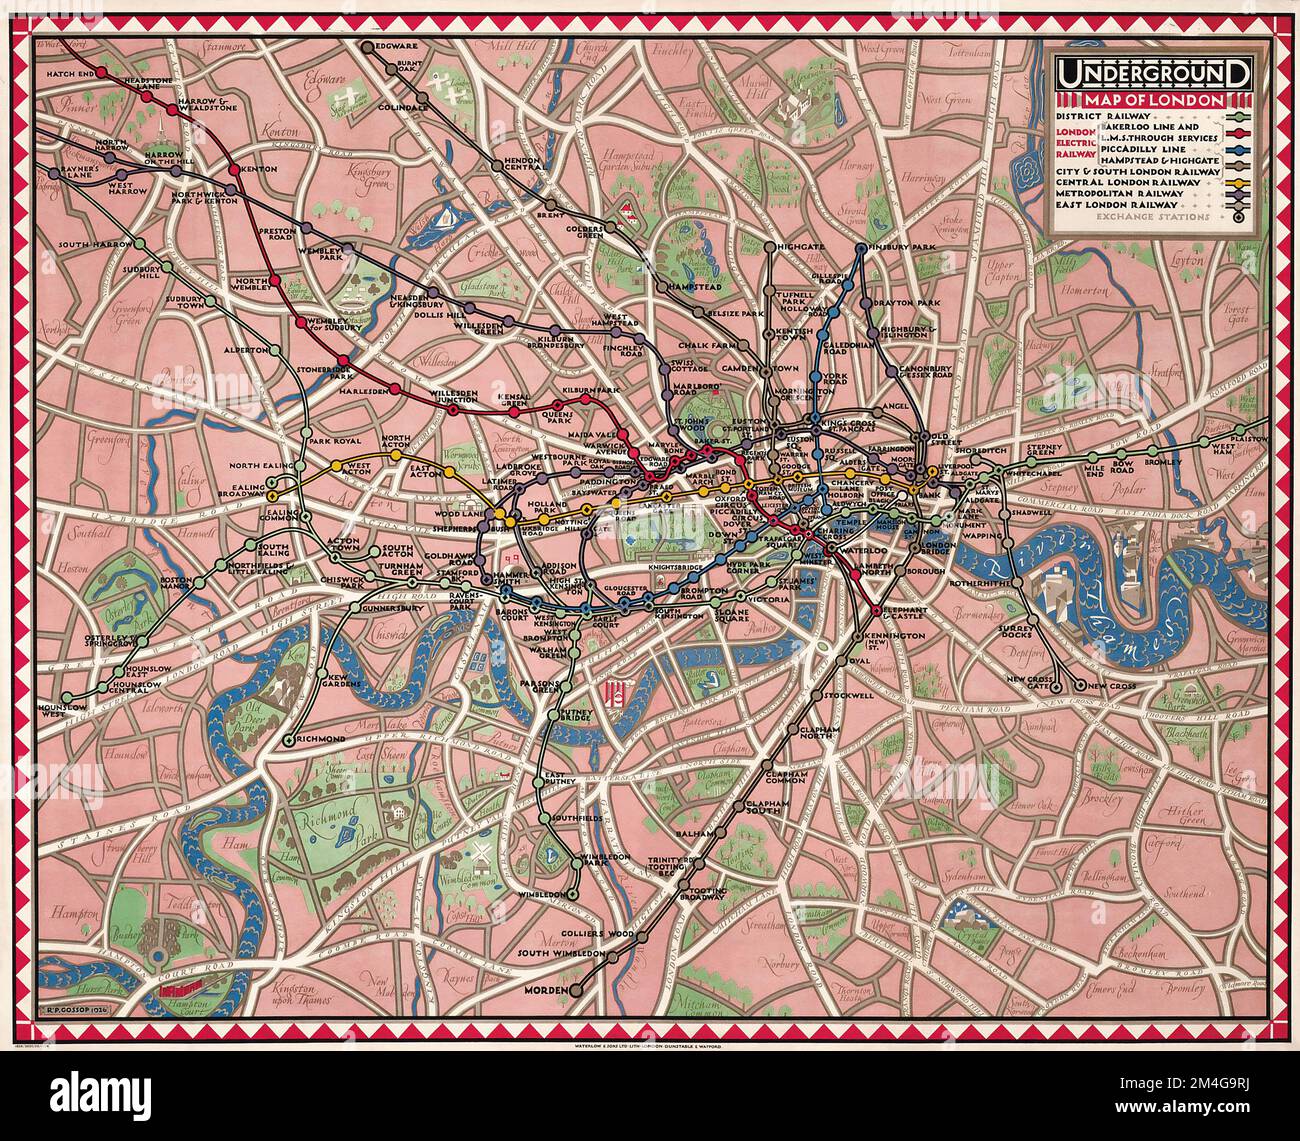 Map of London - Reginald Percy Gossop (1876-1951) UNDERGROUND MAP OF LONDON - 1926 Stock Photo